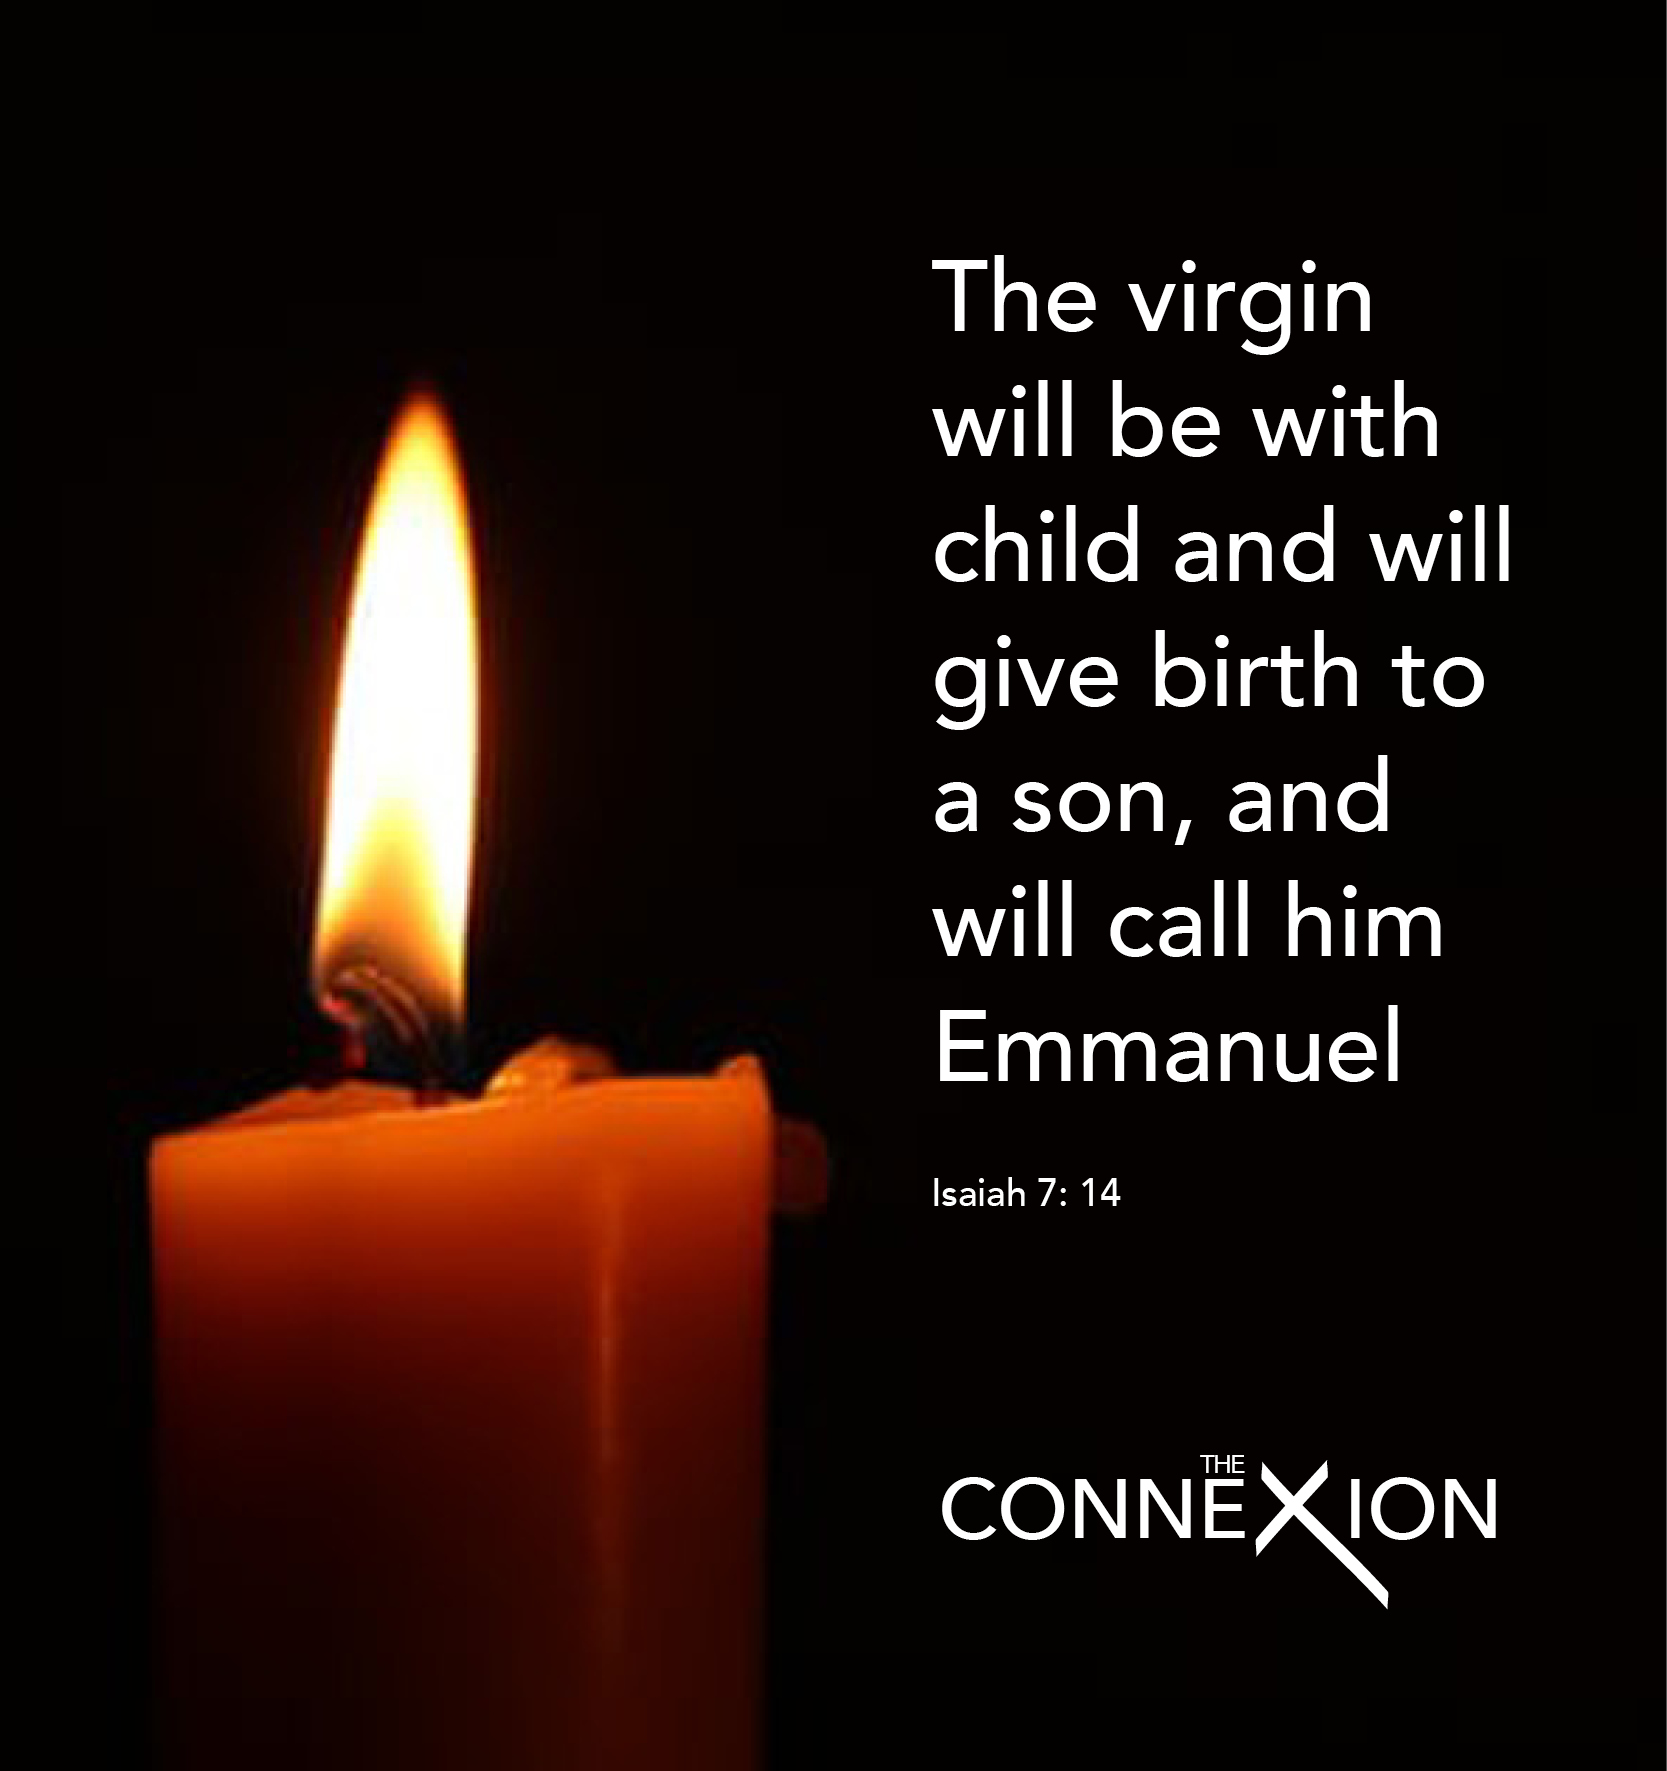 Emmanuel is coming!